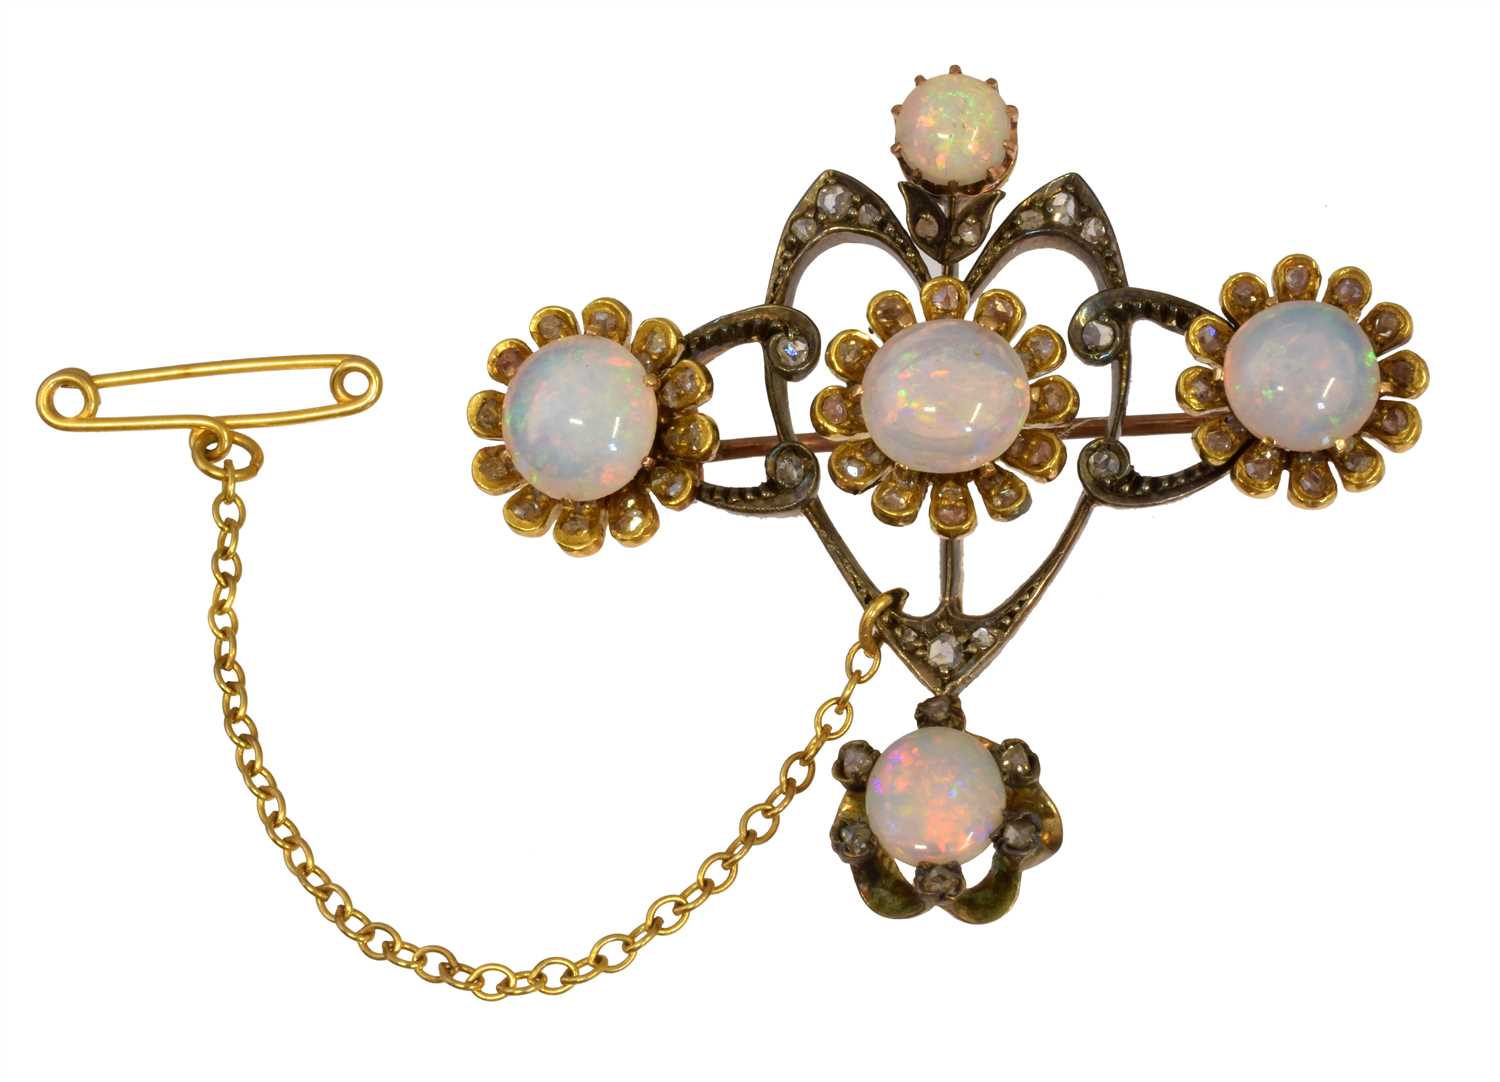 Lot 95 - An Art Nouveau opal and diamond brooch retailed by Wartski